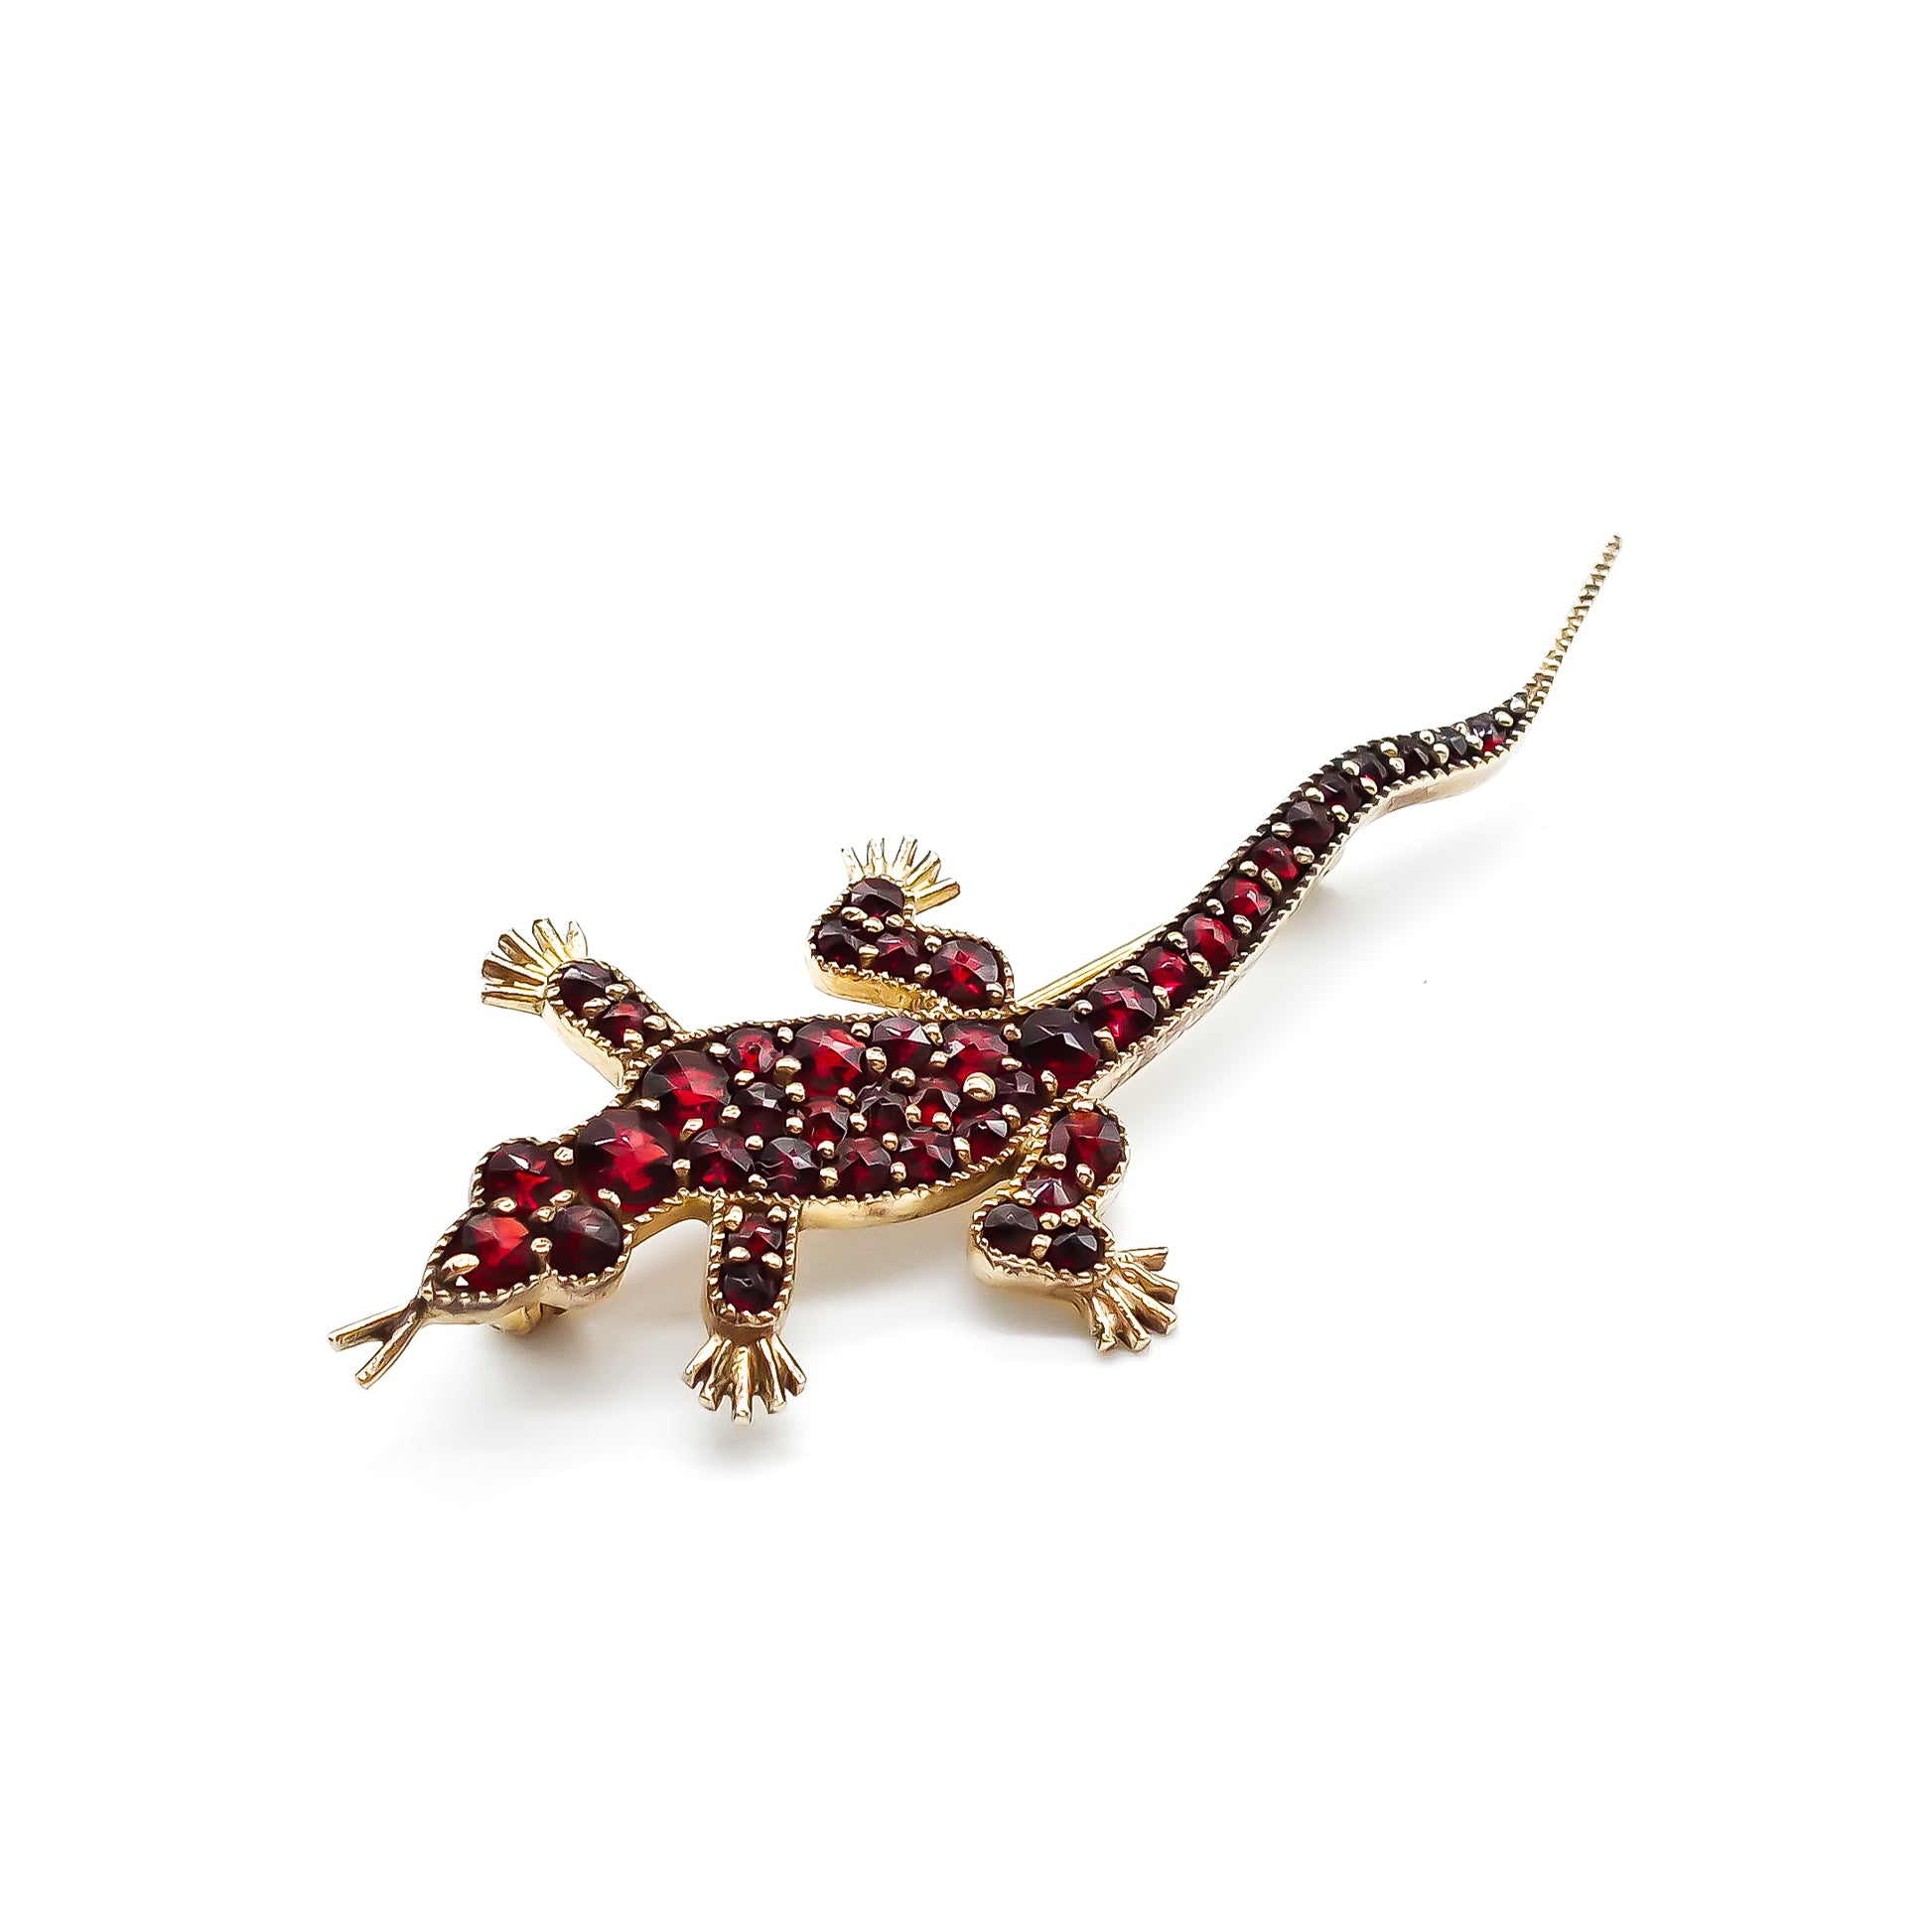 Charming vintage silver gilt lizard brooch set with deep red Bohemian garnets. 